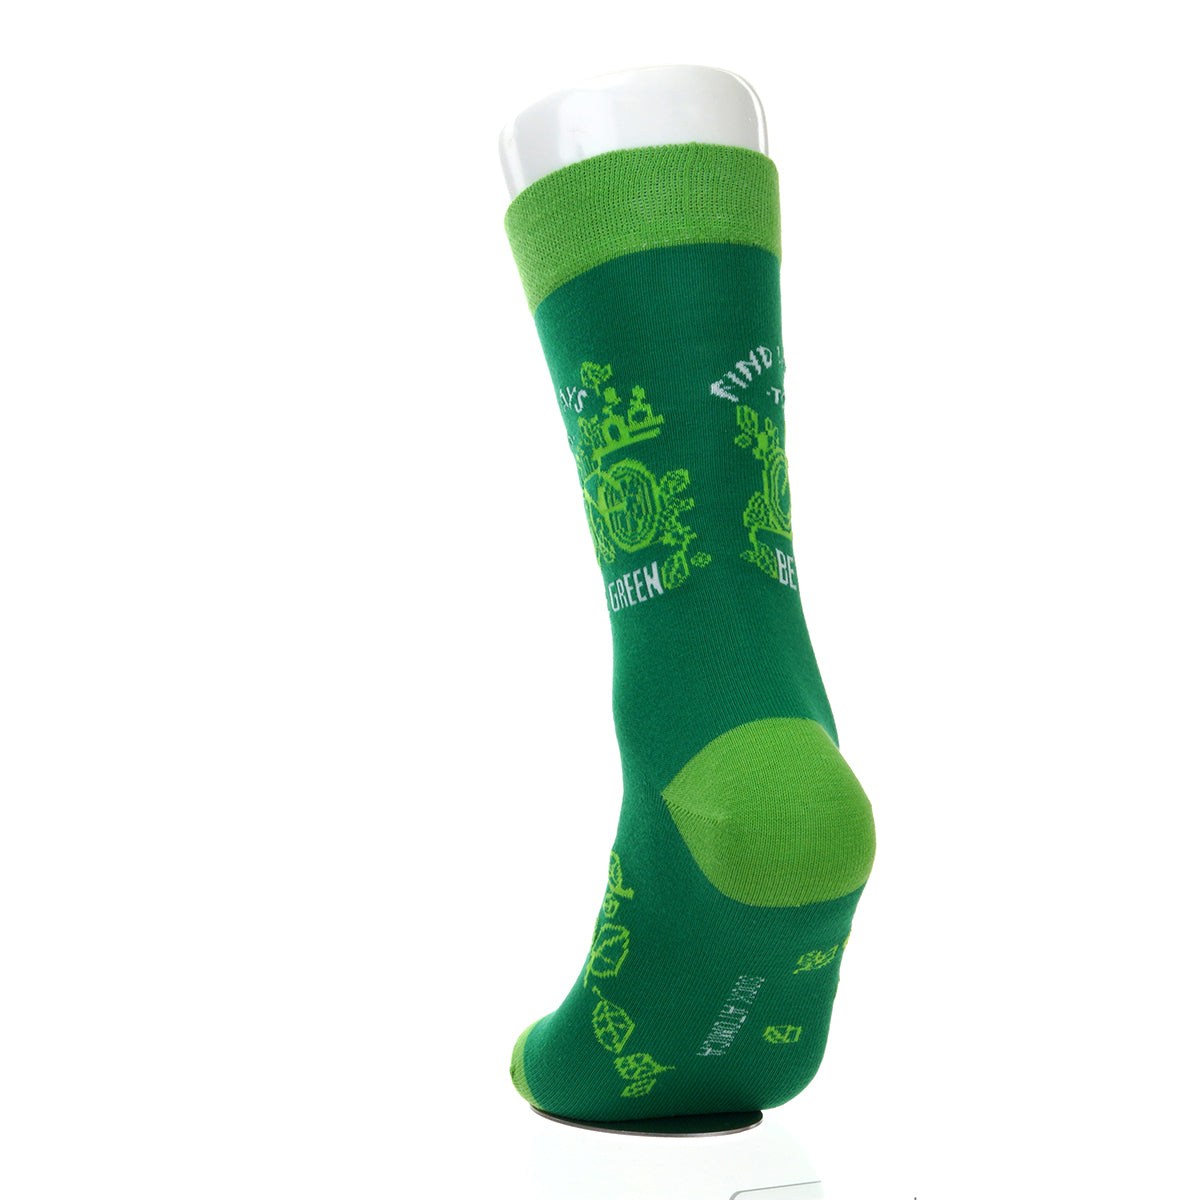 Beautifica Unisex Socks - Green Data Small